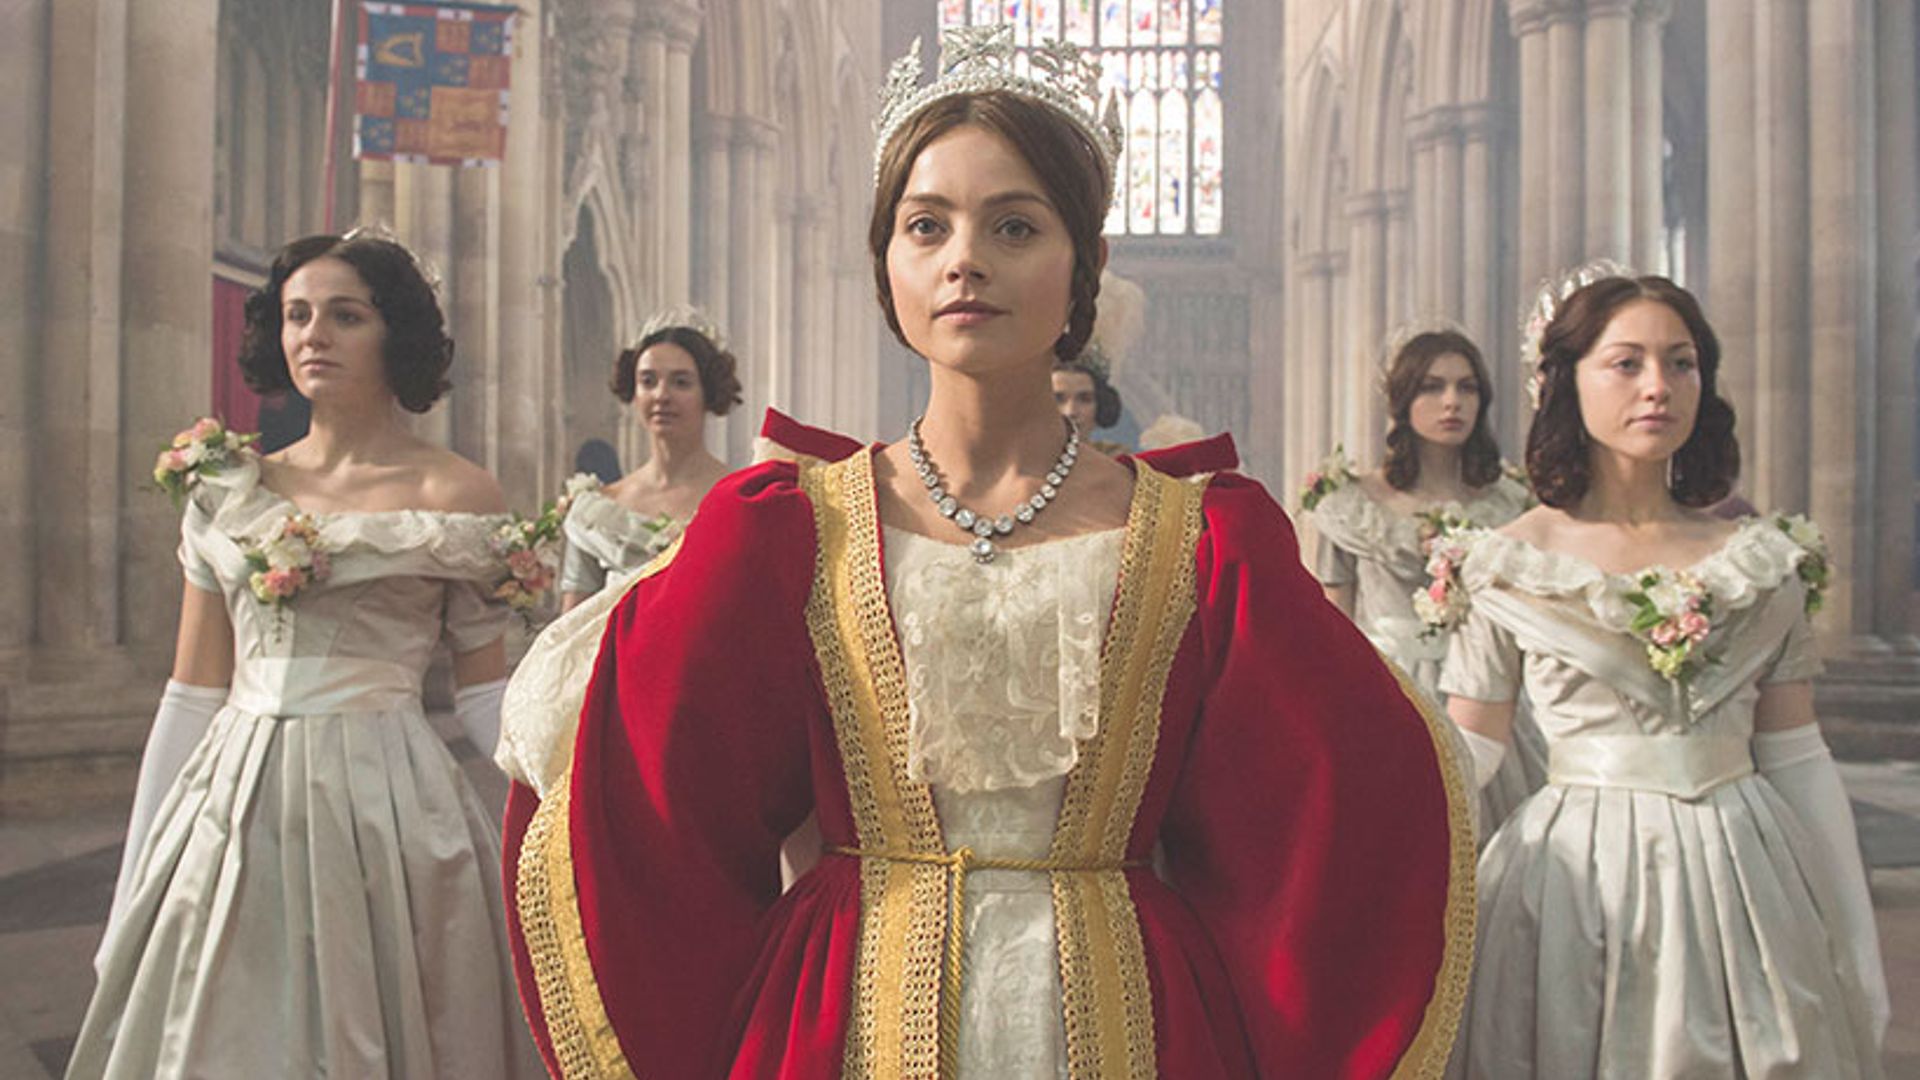 Jenna Coleman dazzles in new trailer for Queen Victoria drama